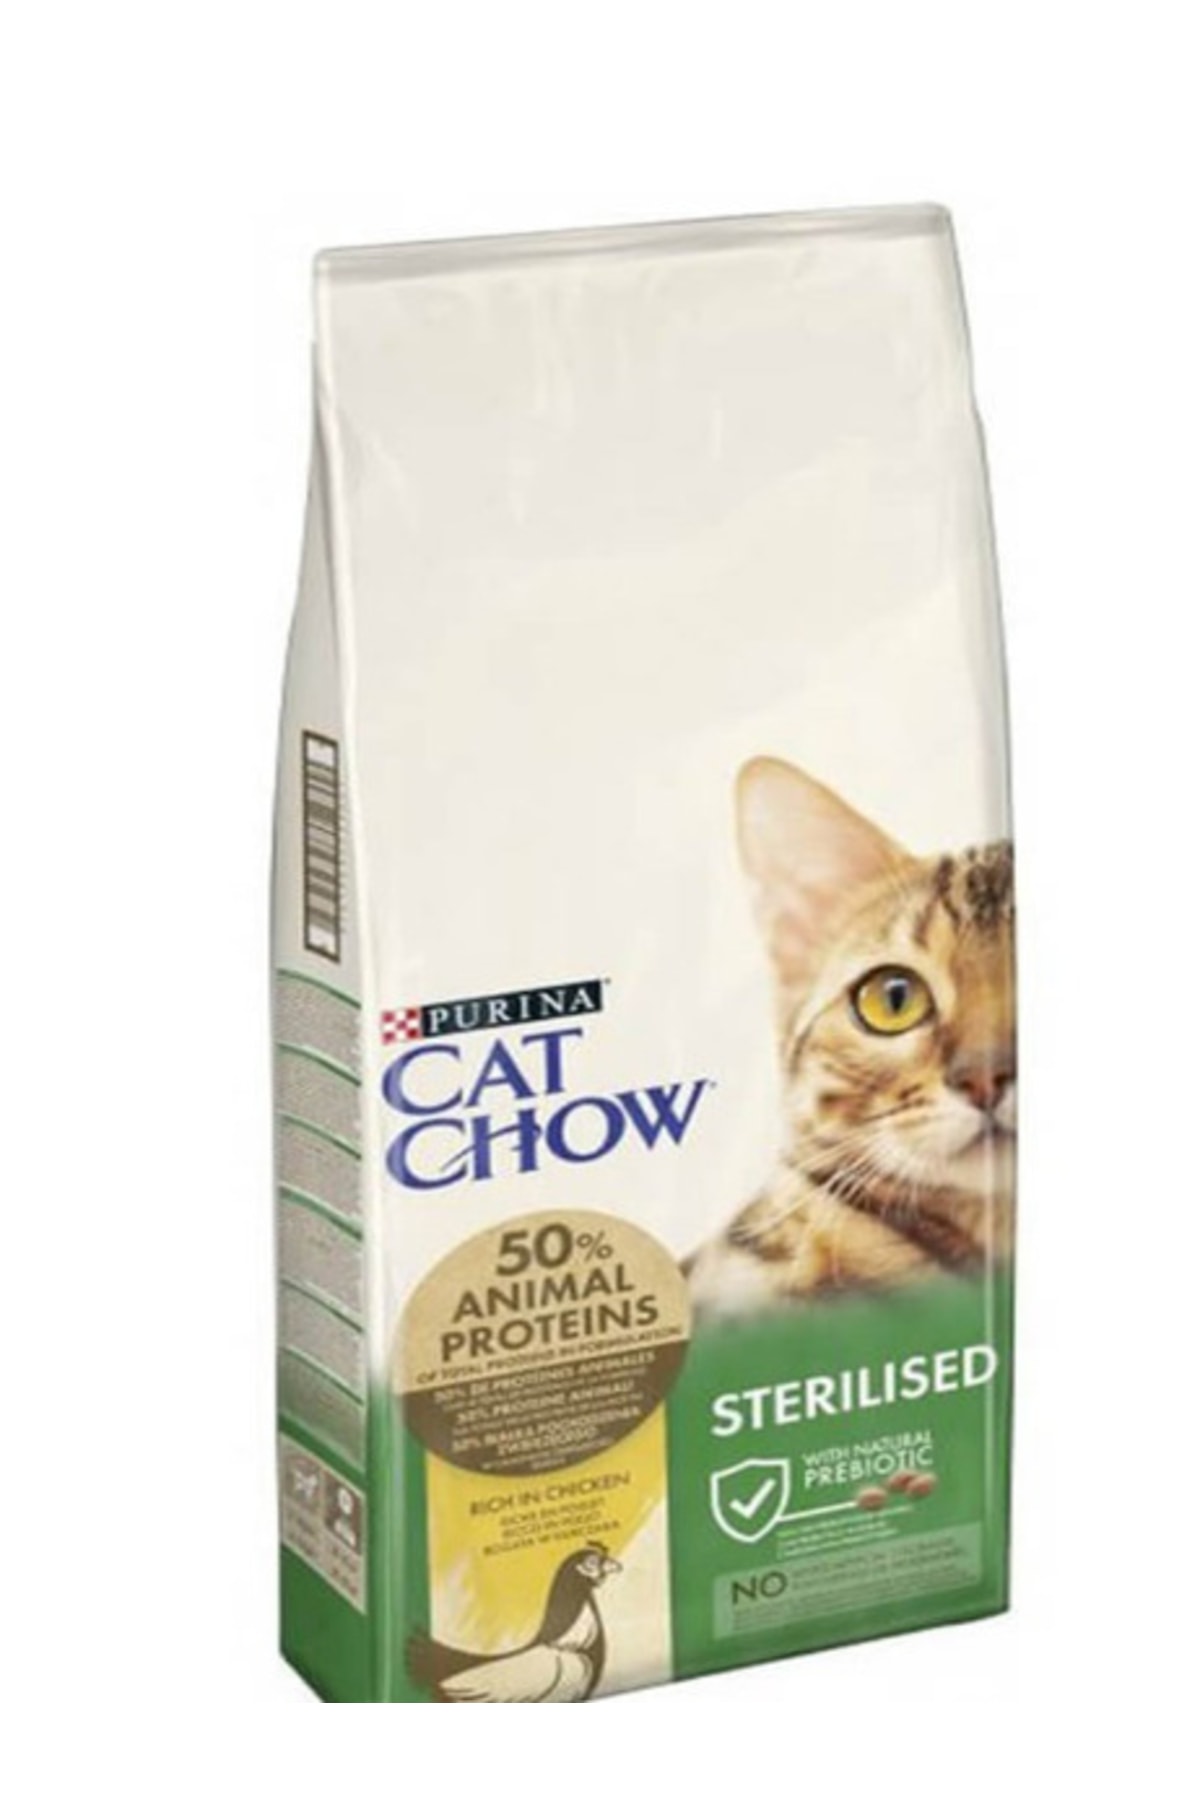 Purina Cat Chow Tavuklu Sterilised Kısırlaştırılmış Kedi Maması 15 Kg